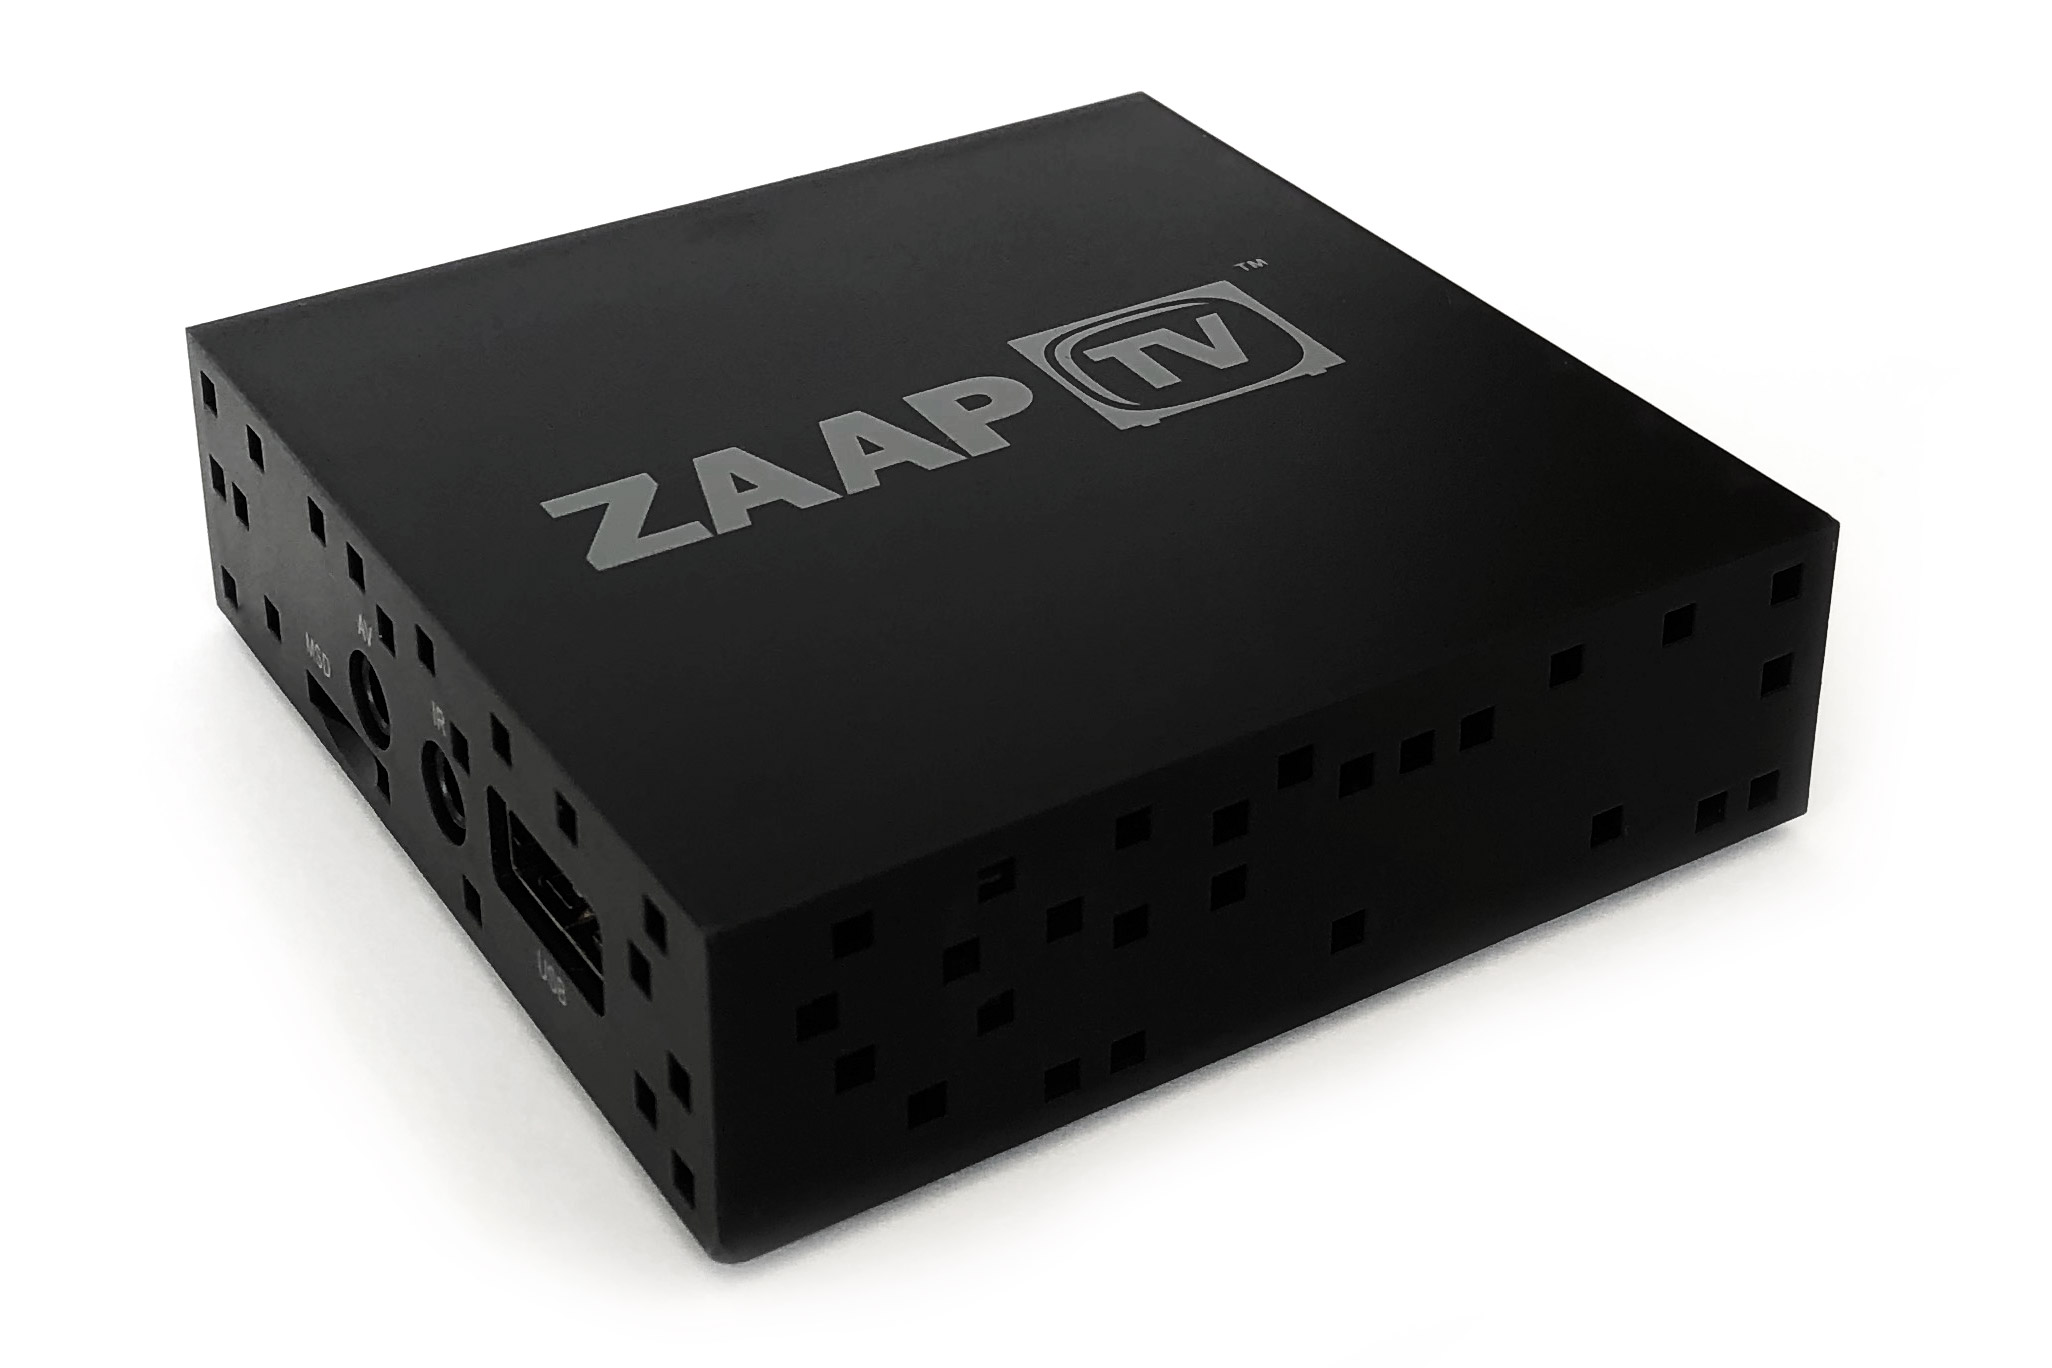 zaapTV HD709N IPTV Media Player